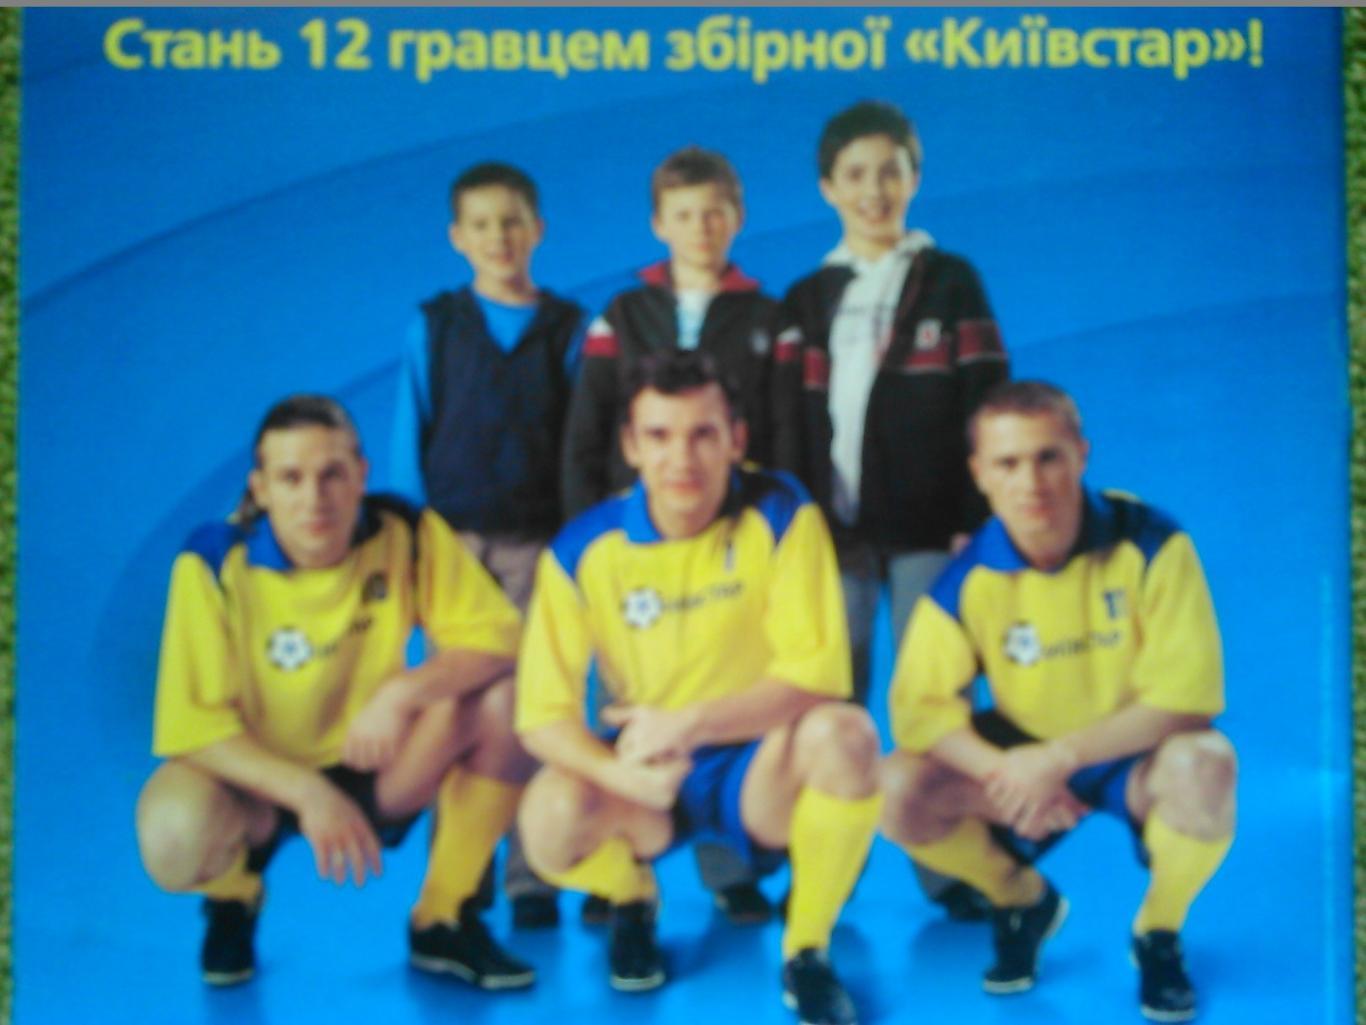 Футбол (Украина)№19(449).2006. Оптом скидки до 45%!. Отлично сохранен! 1